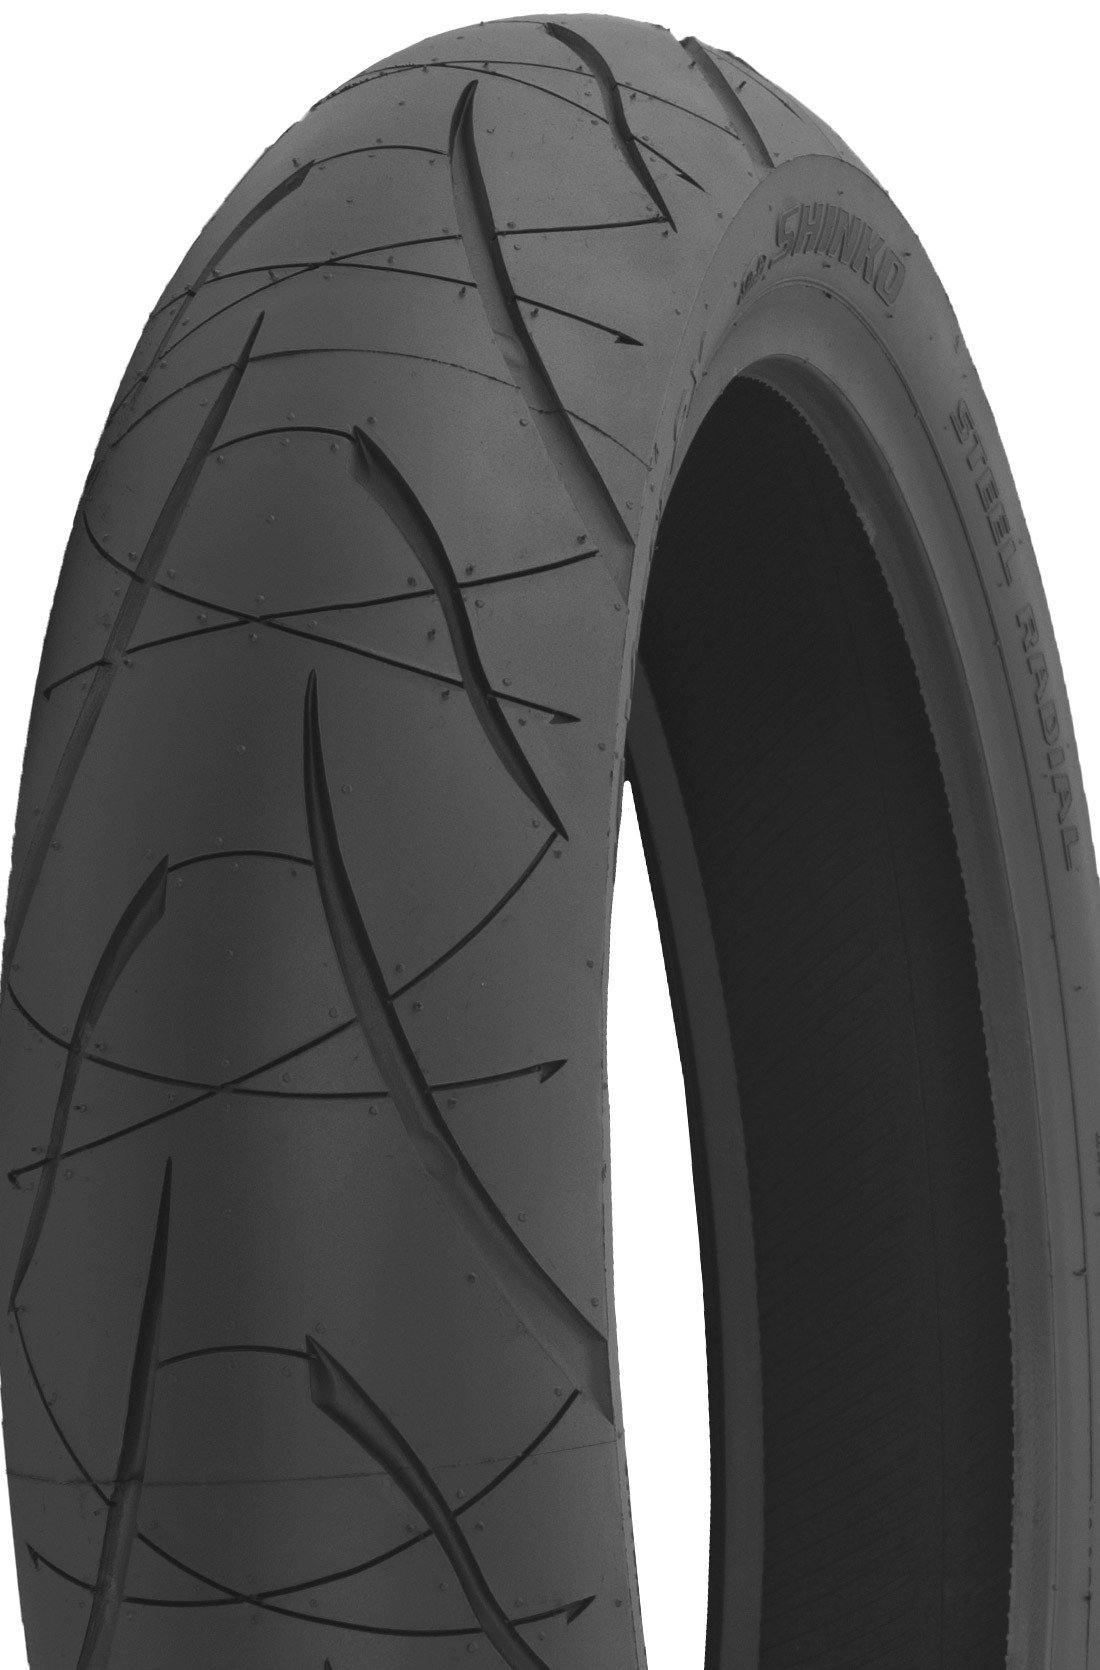 Shinko Tires F016 Series (120/70ZR-17) - Durian Bikers